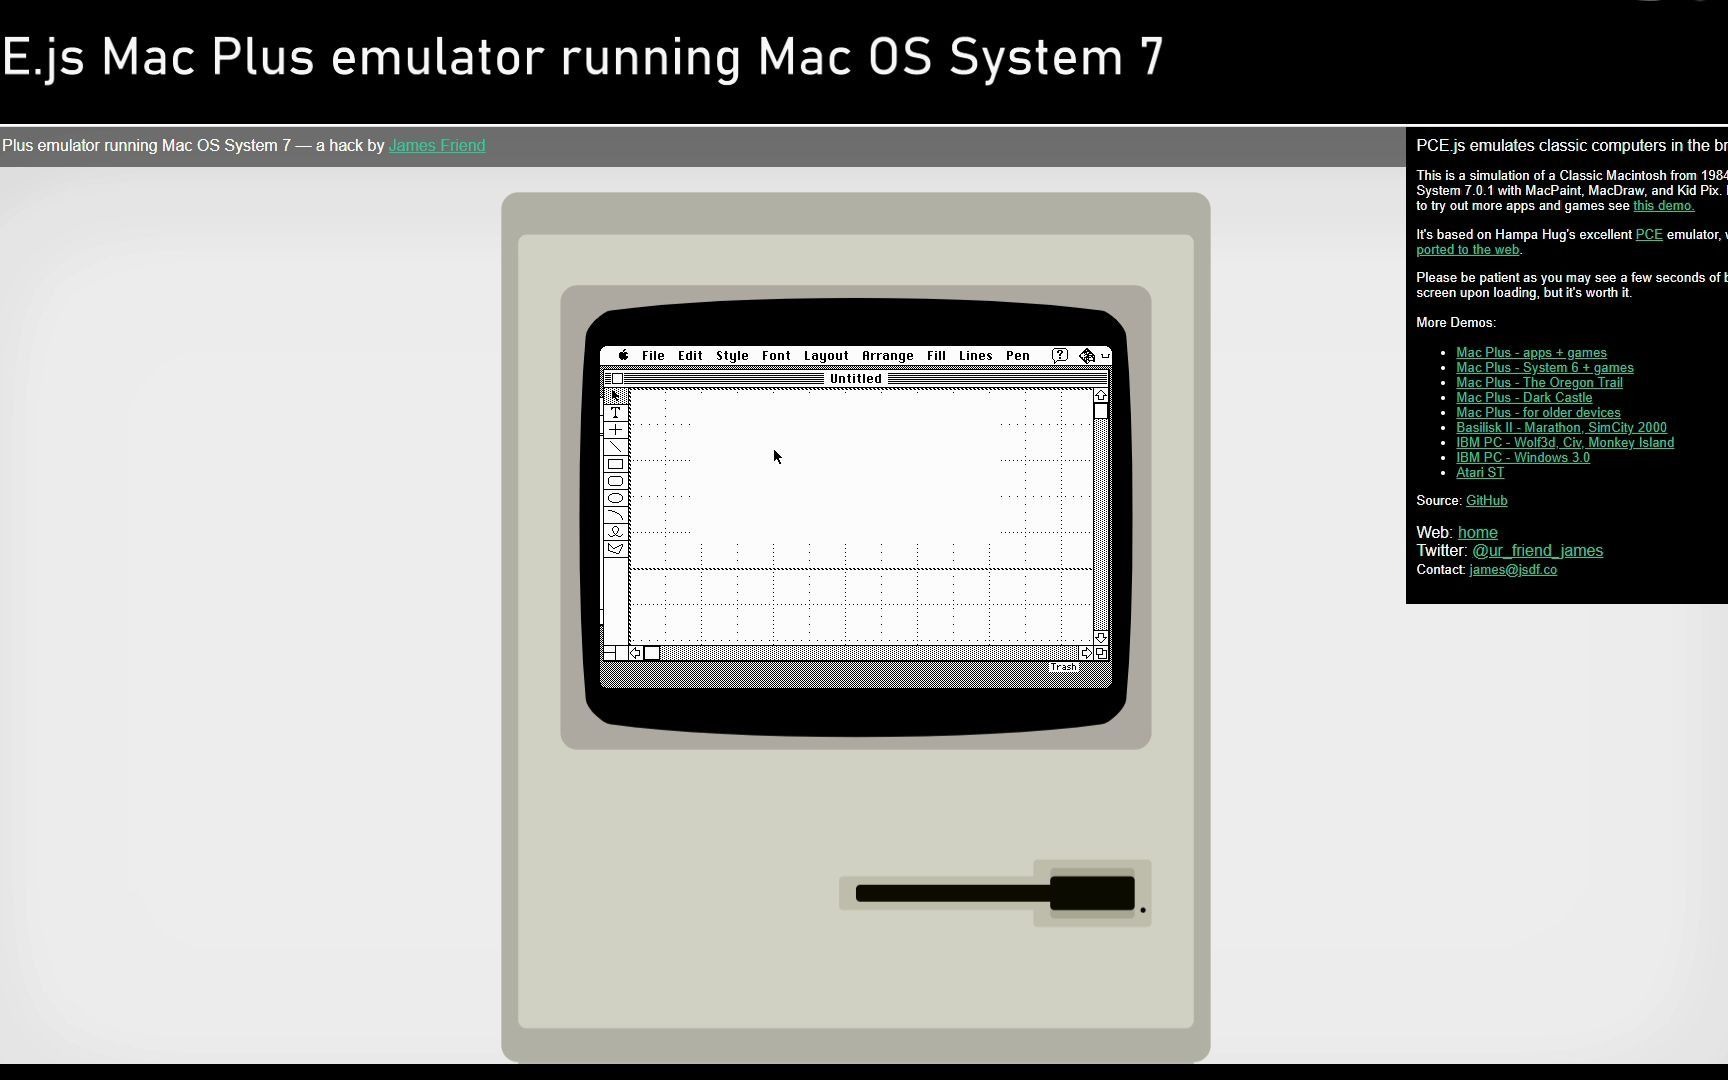 pce mac plus emulator